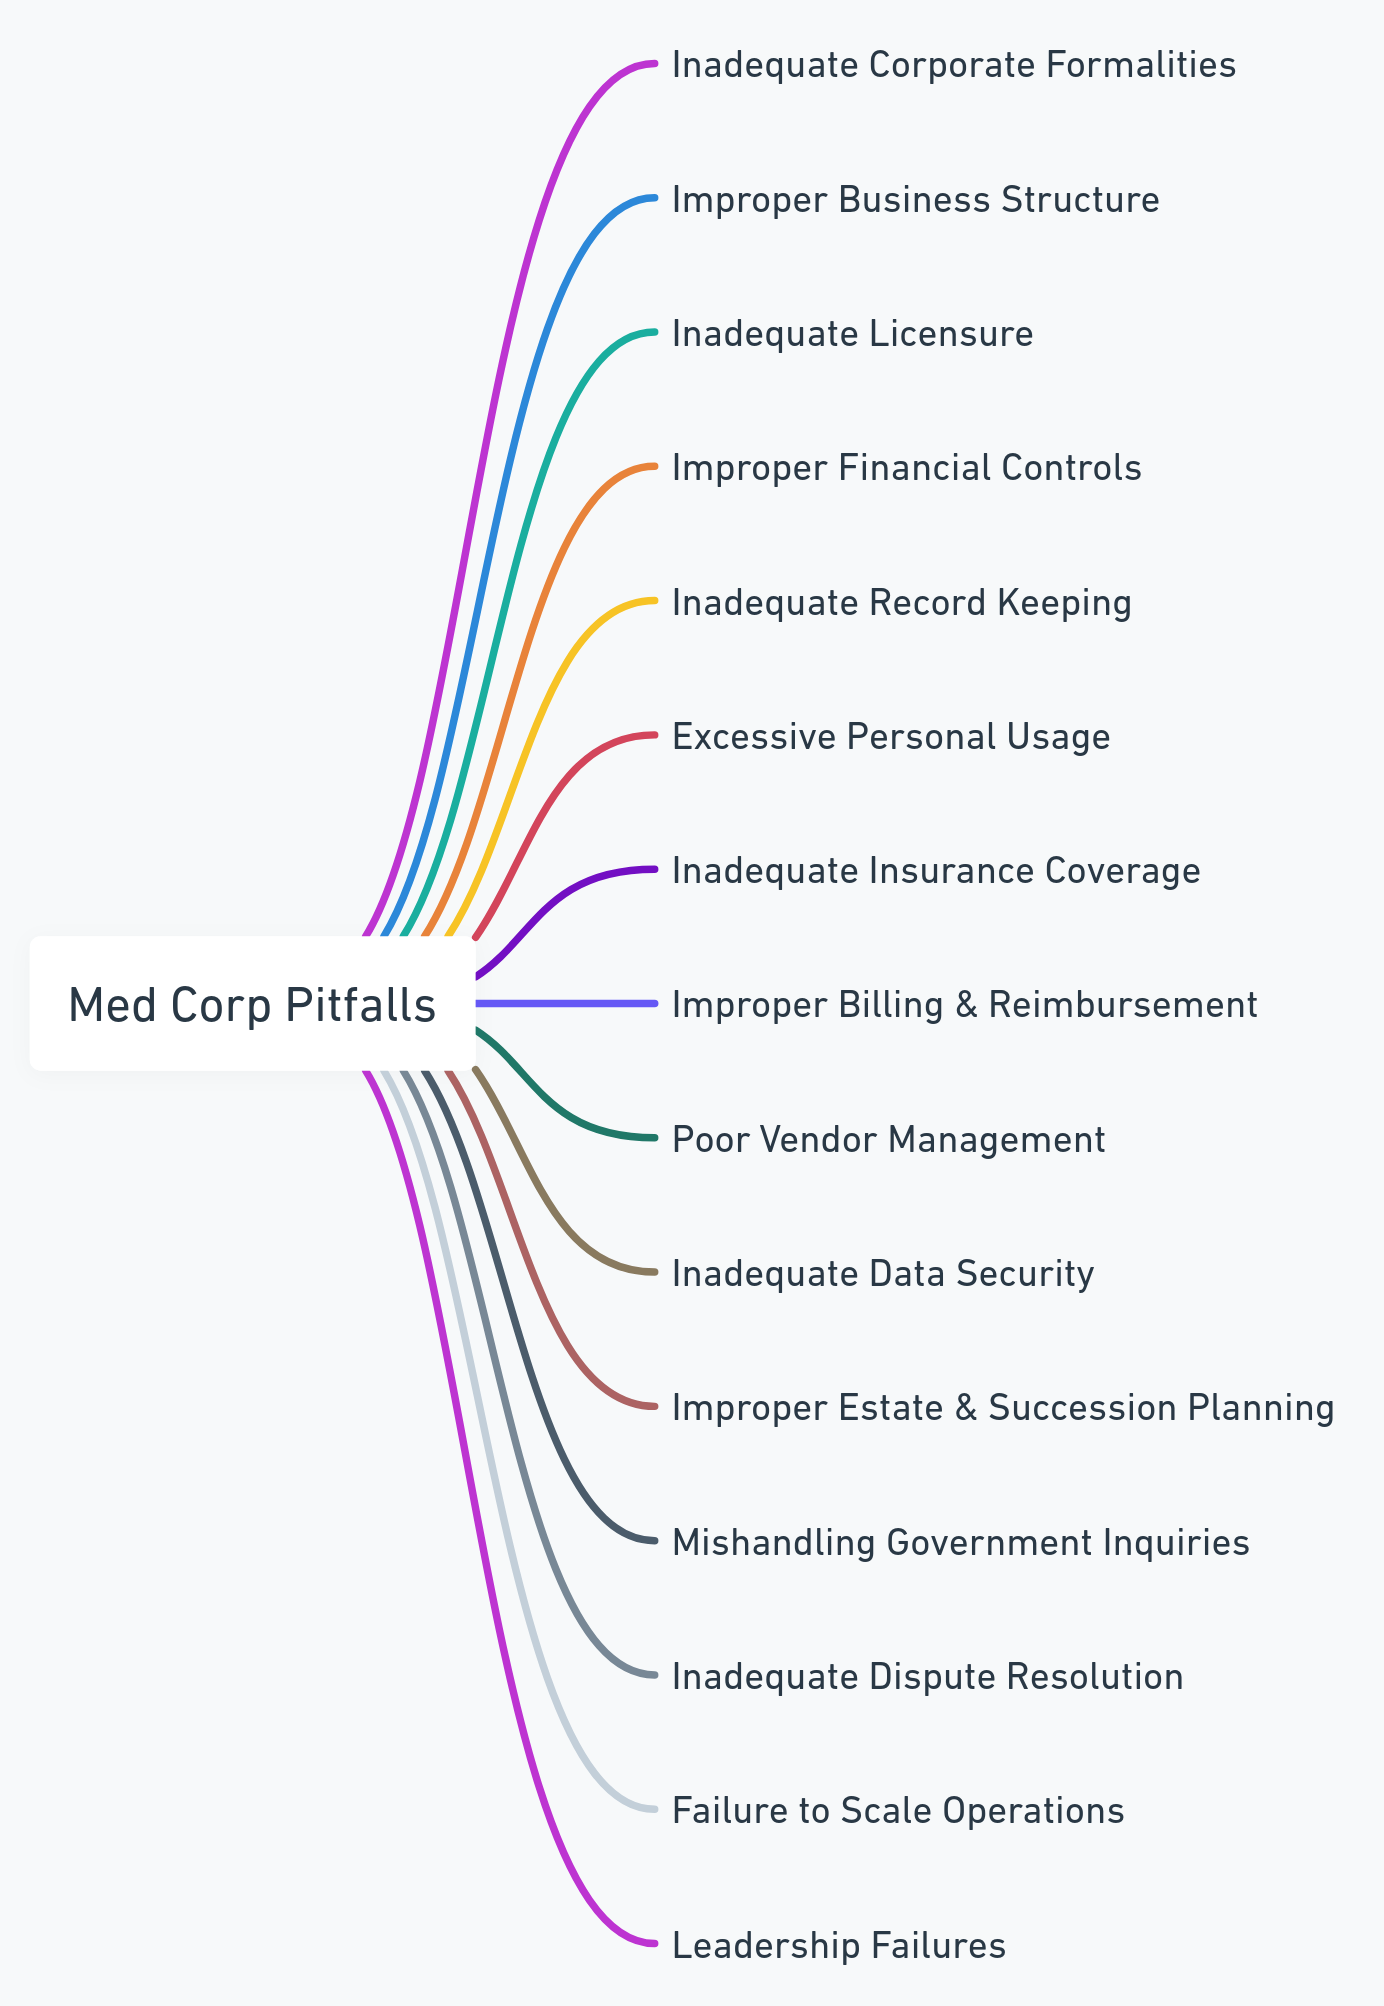 Mindmap outlining pitfalls in medical corporation management